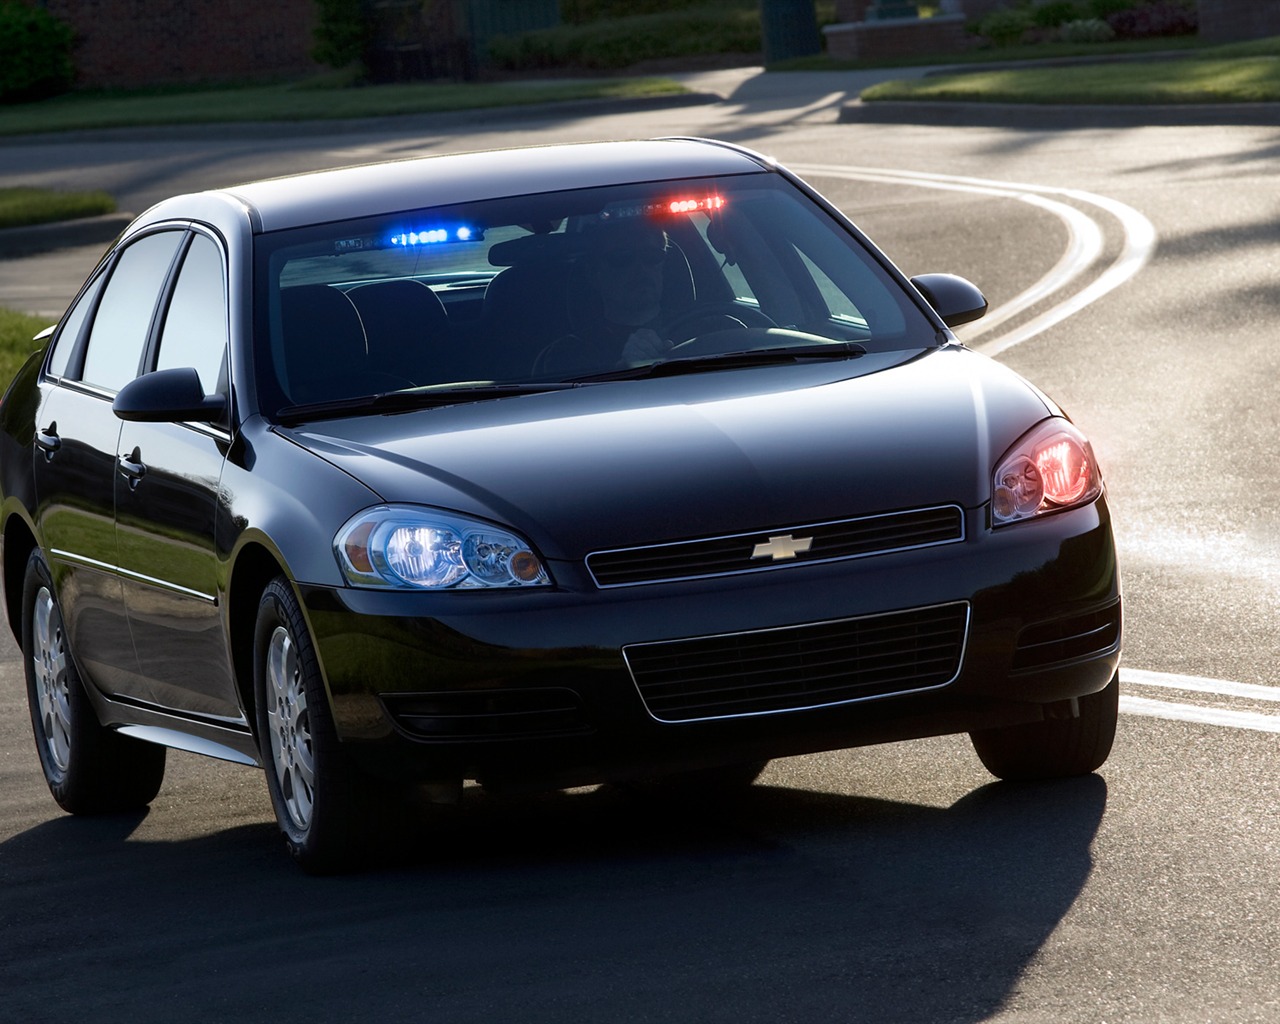 Chevrolet Impala Police Vehicle - 2011 雪佛兰6 - 1280x1024